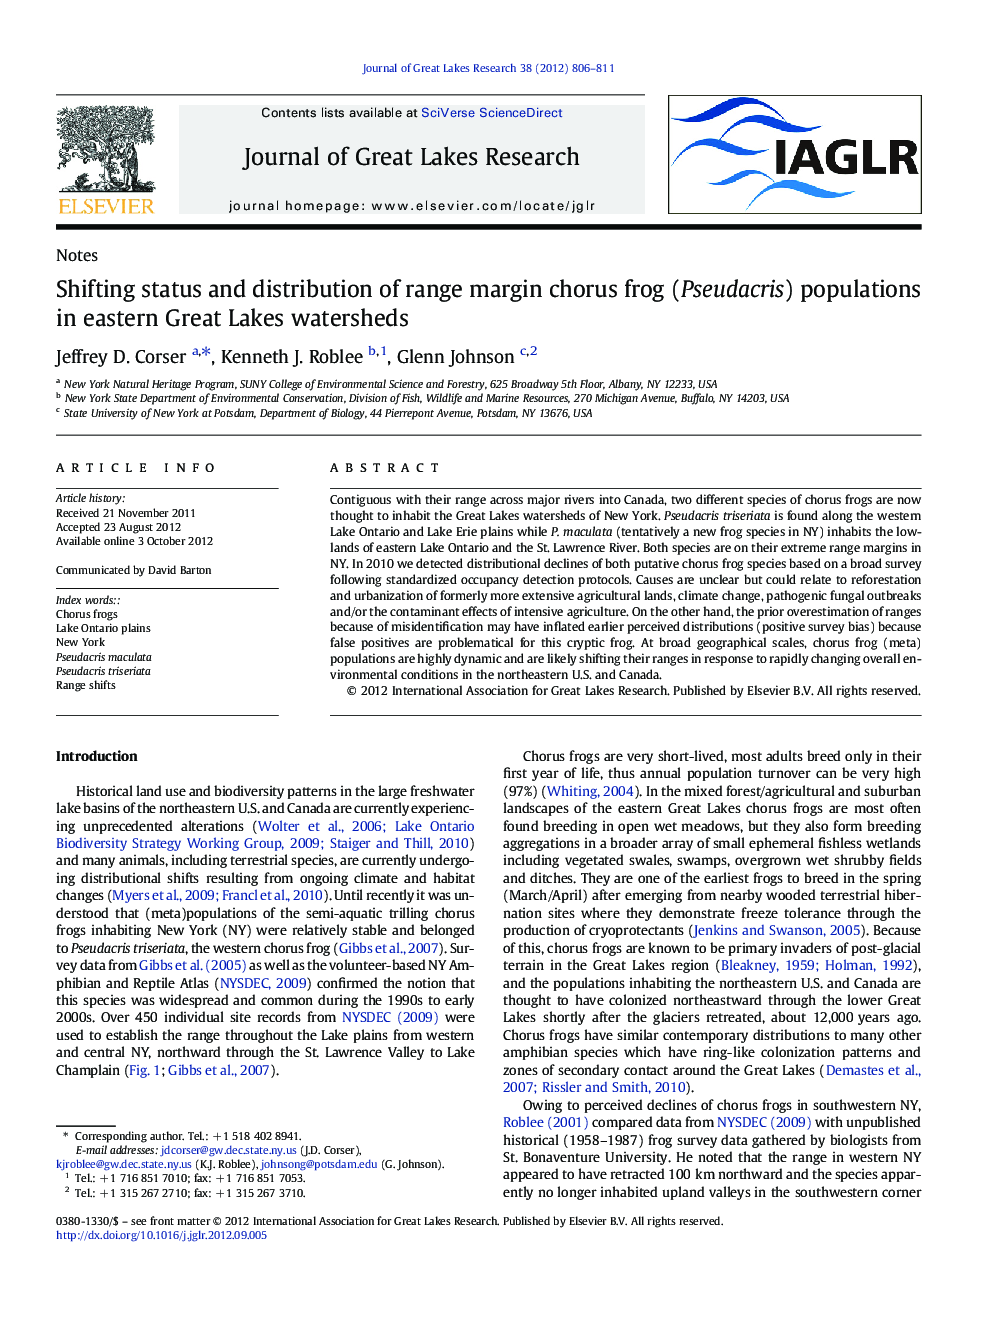 Shifting status and distribution of range margin chorus frog (Pseudacris) populations in eastern Great Lakes watersheds